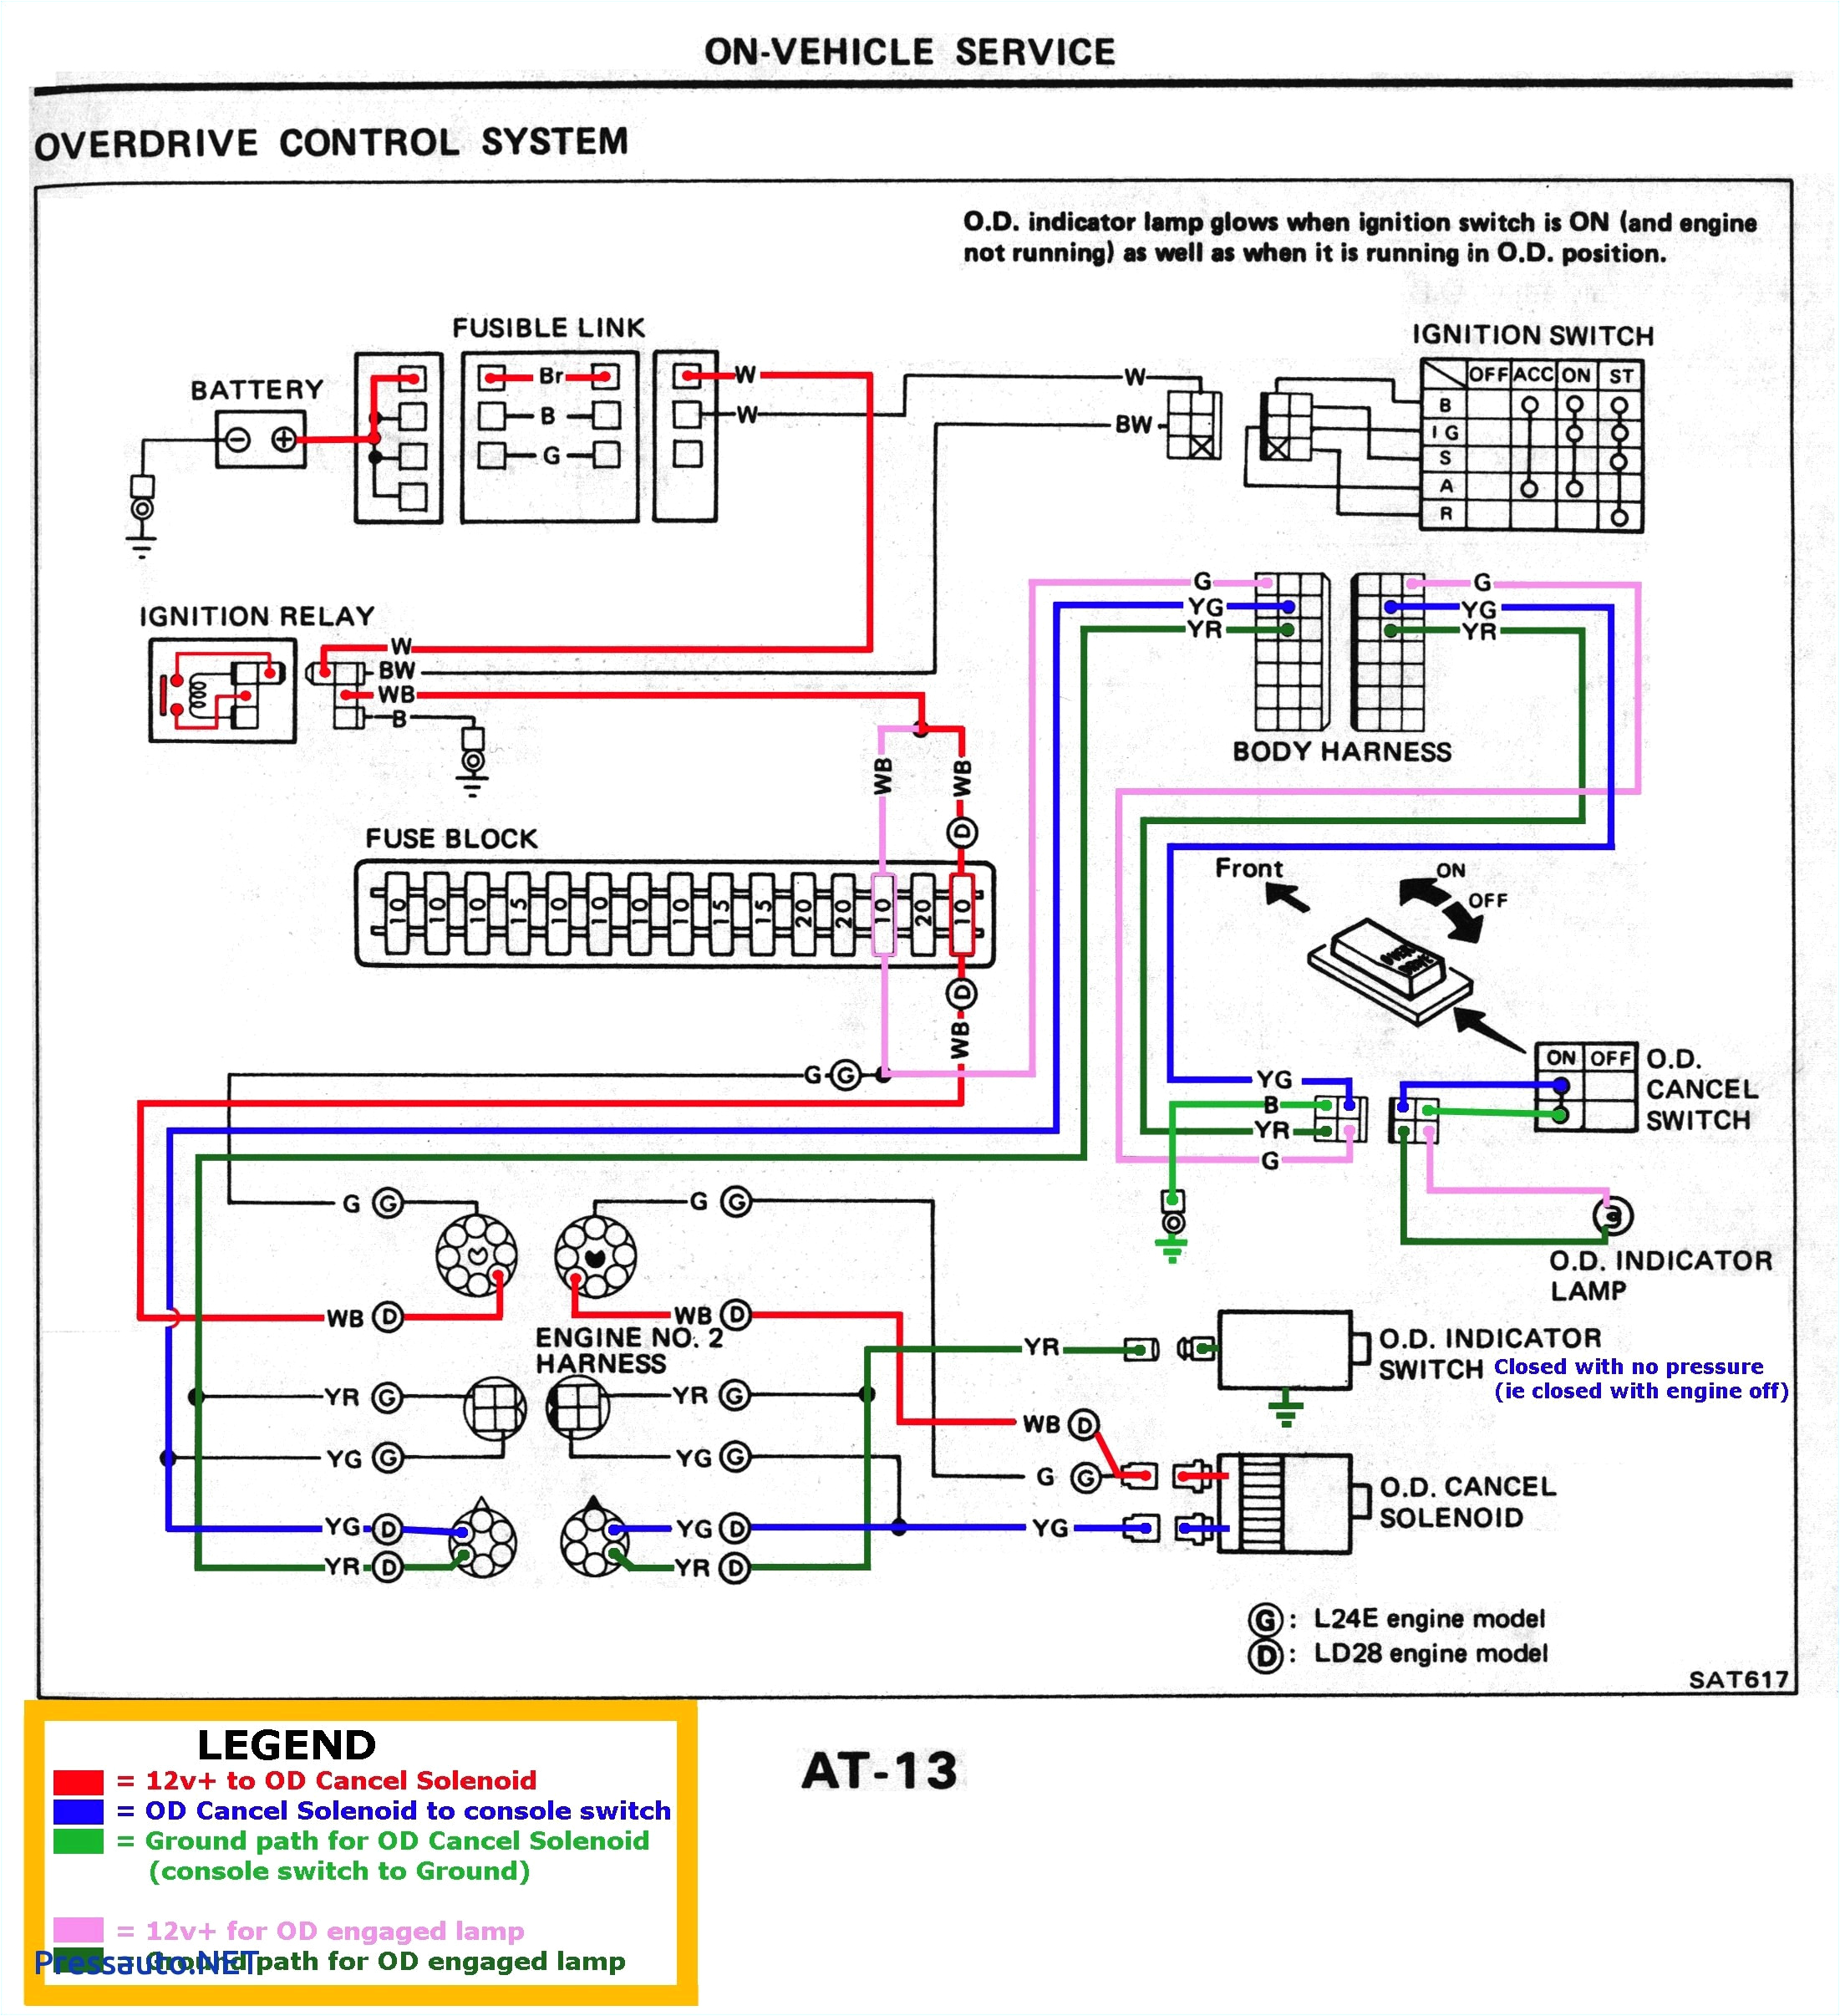 48 volt dc wiring diagram wiring diagram48 volt electric scooter wiring diagram wiring diagram insidewiring diagram